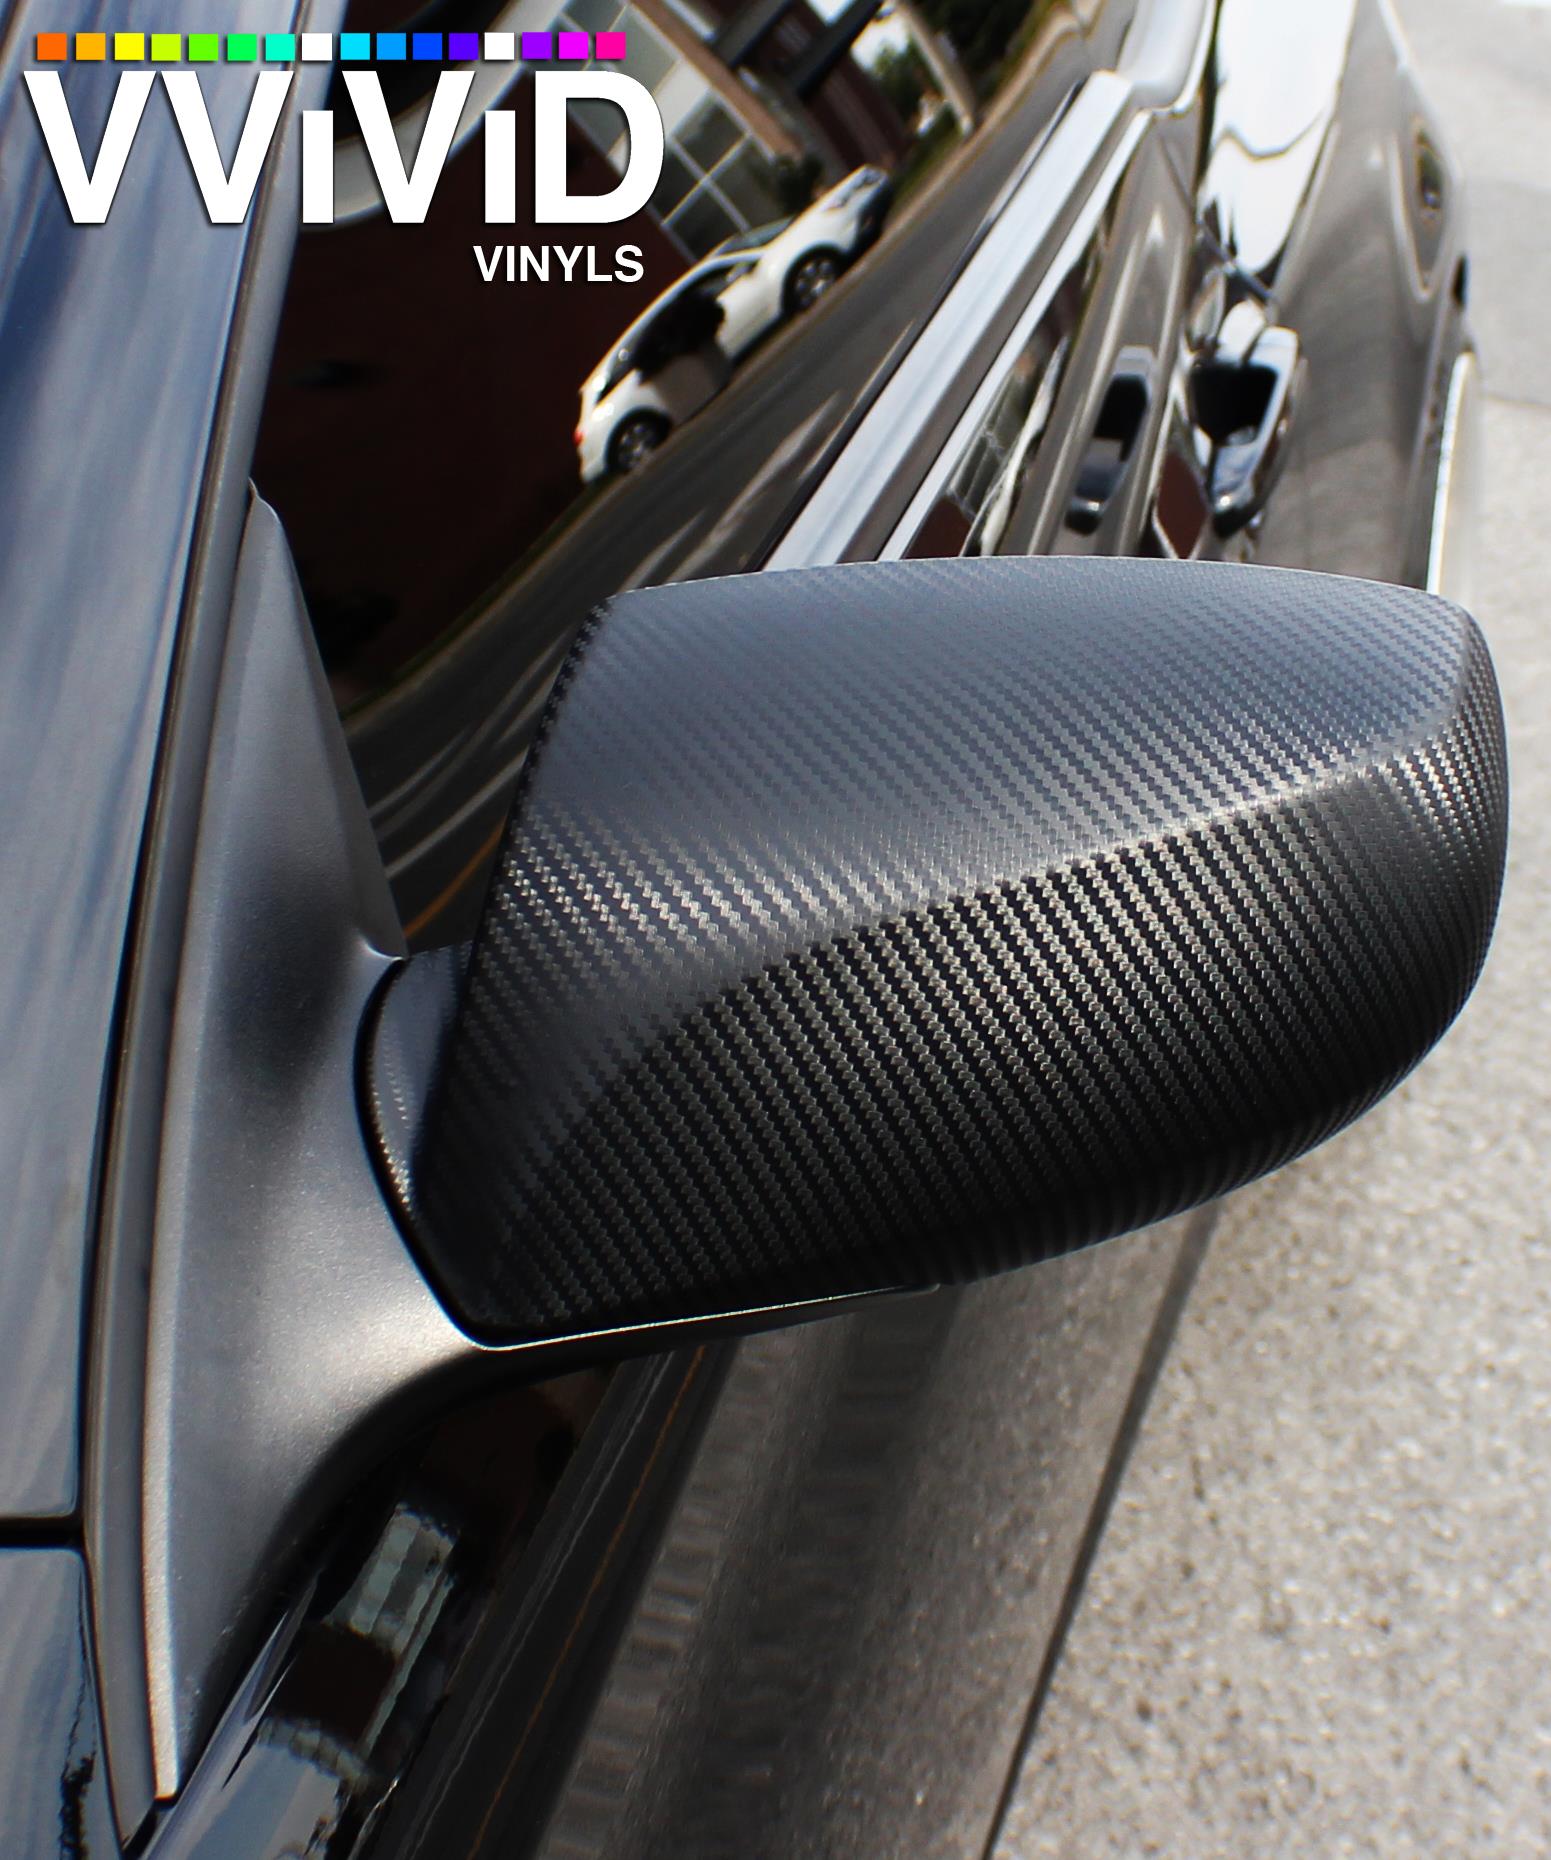 VViViD Dry Carbon Fibre Detailing Vinyl Wrap Tape 2 Inch x 20ft Roll DIY  (Black)